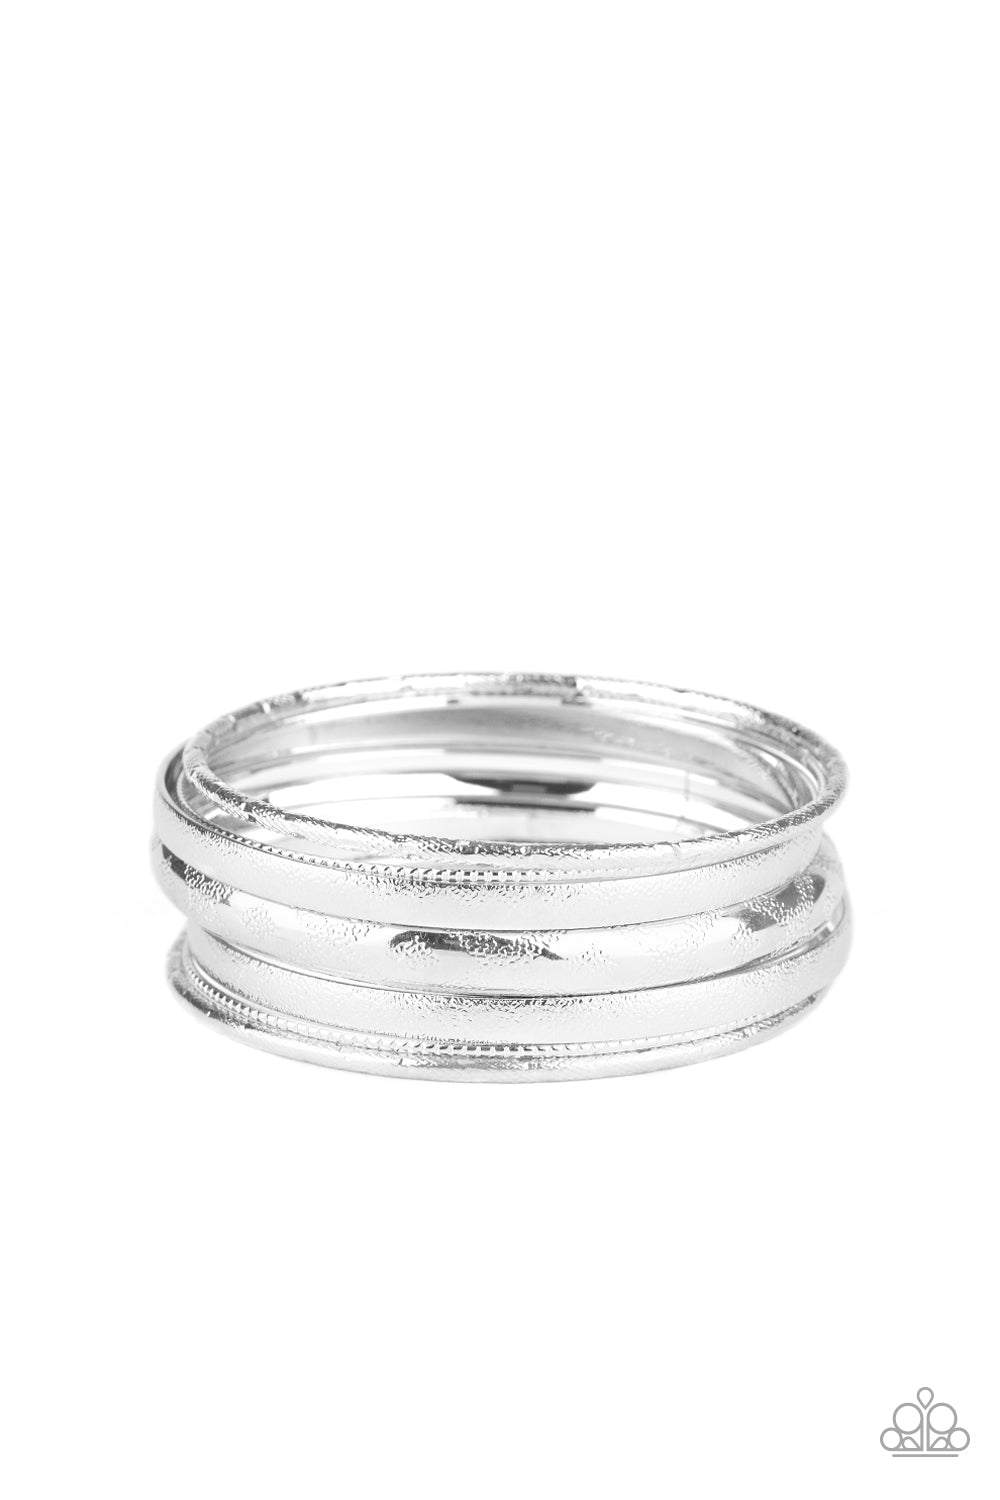 Basic Bauble Silver-Bracelet